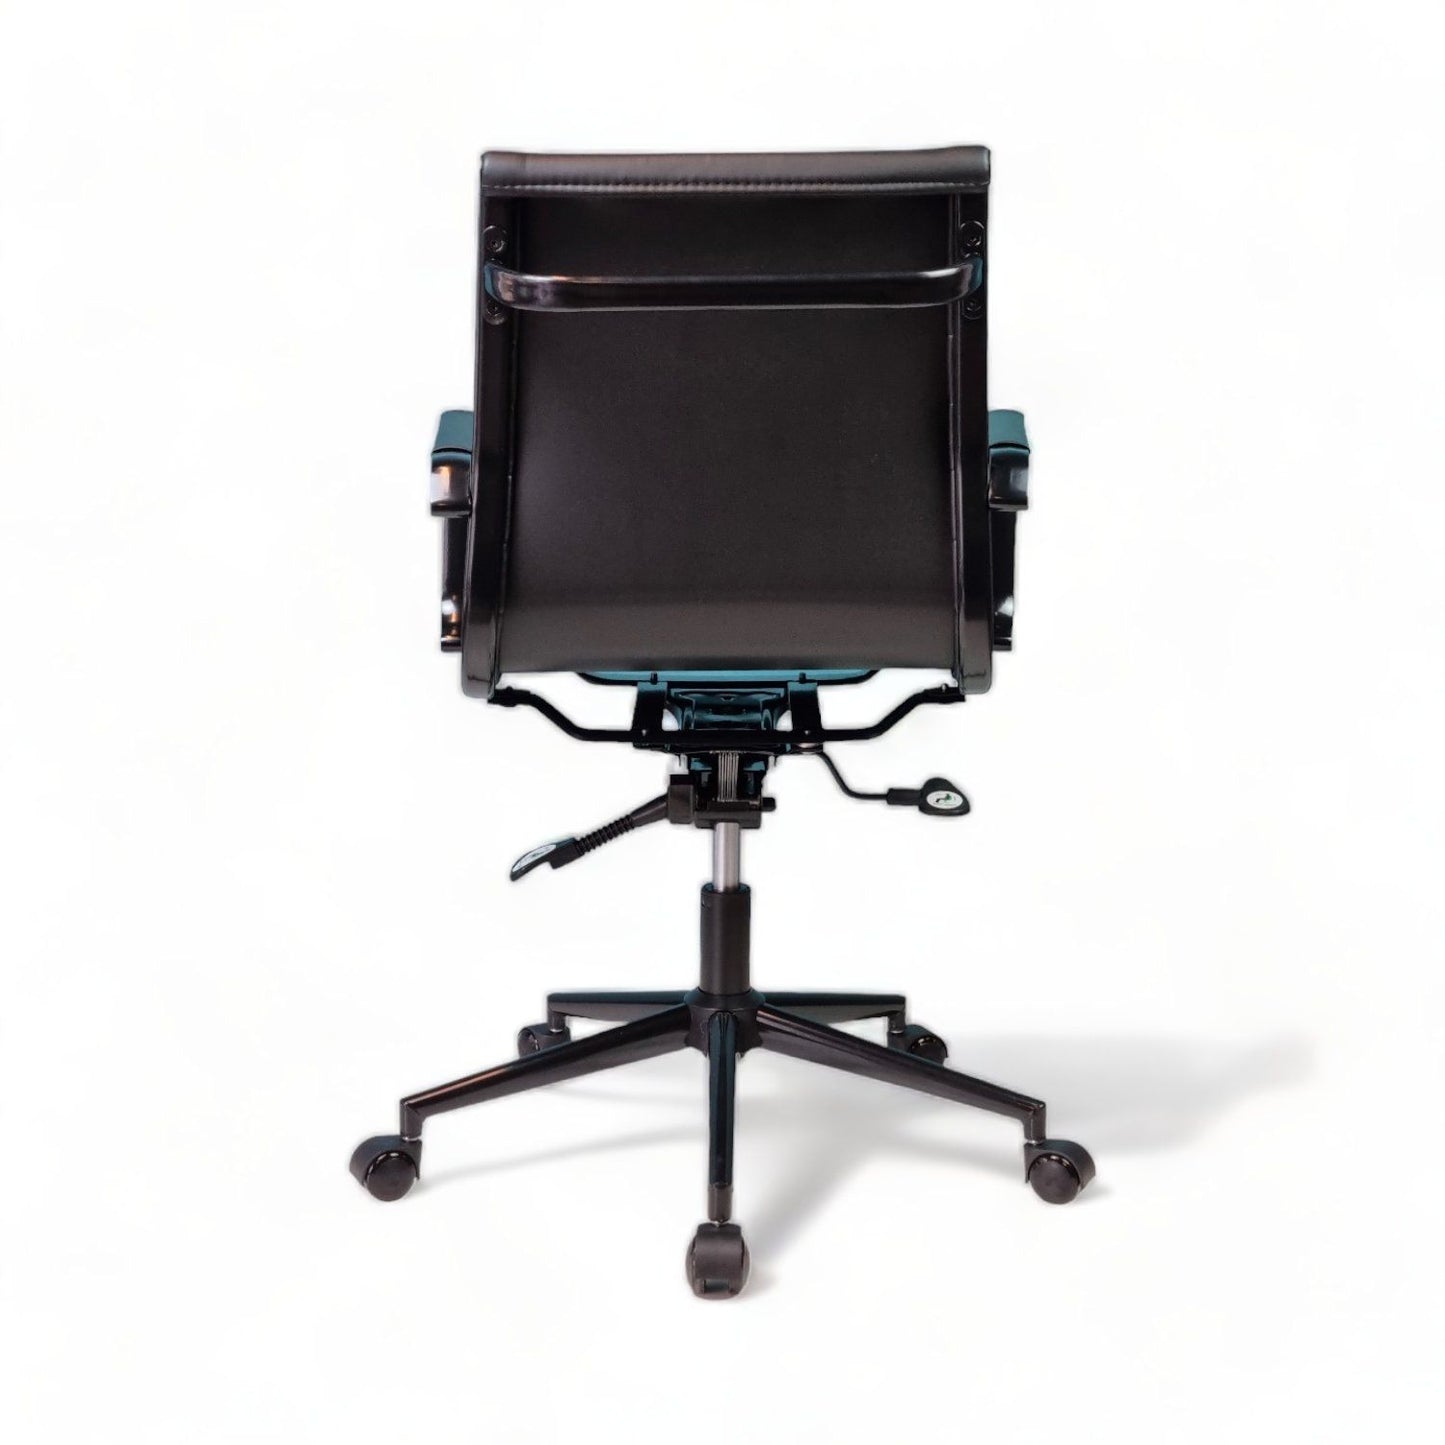 Bety Work - Black - Office Chair